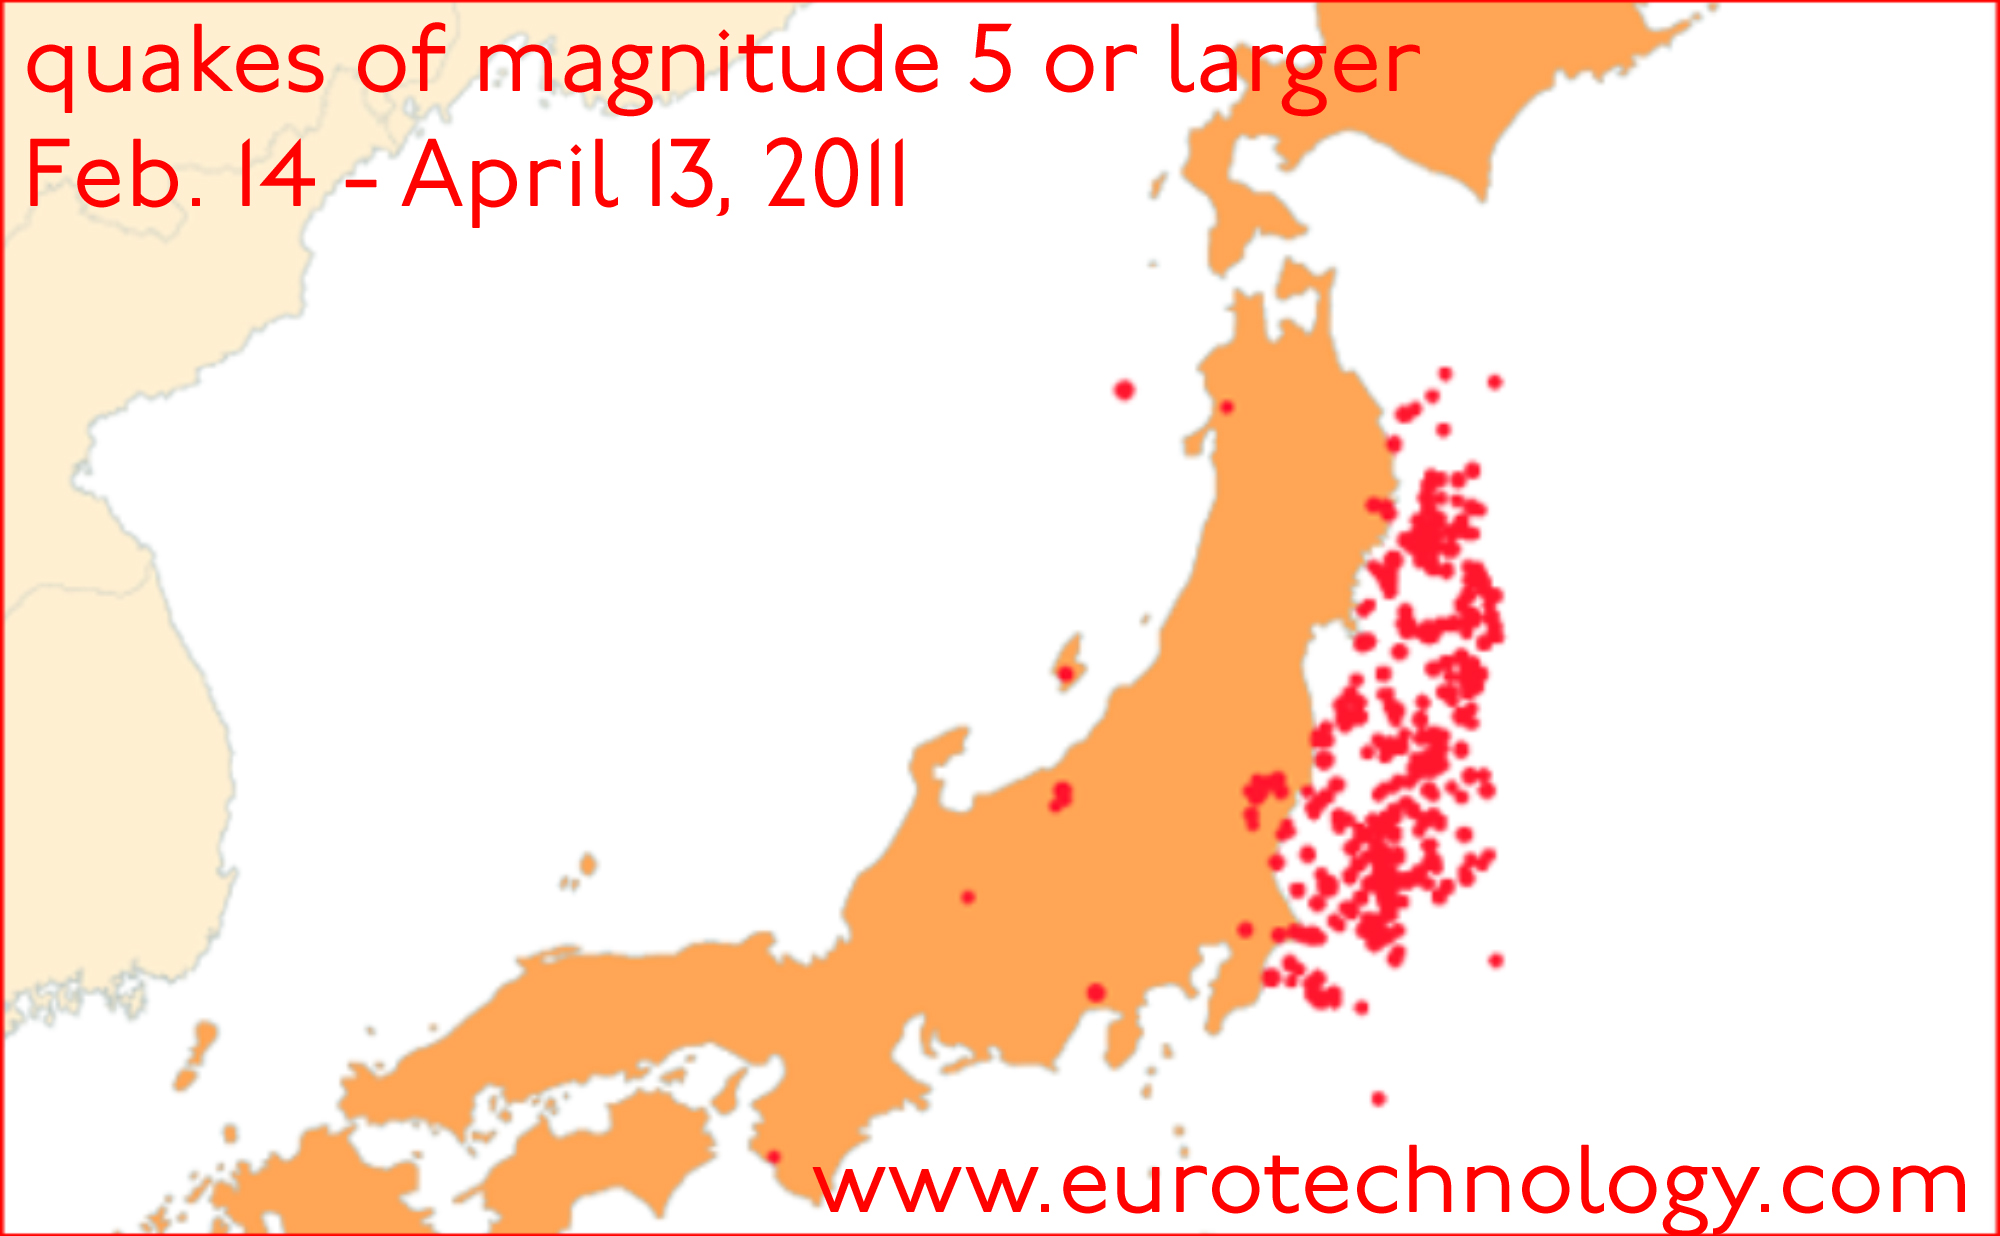 Tohoku disaster 6 years: March 11, 2011 14:46:24